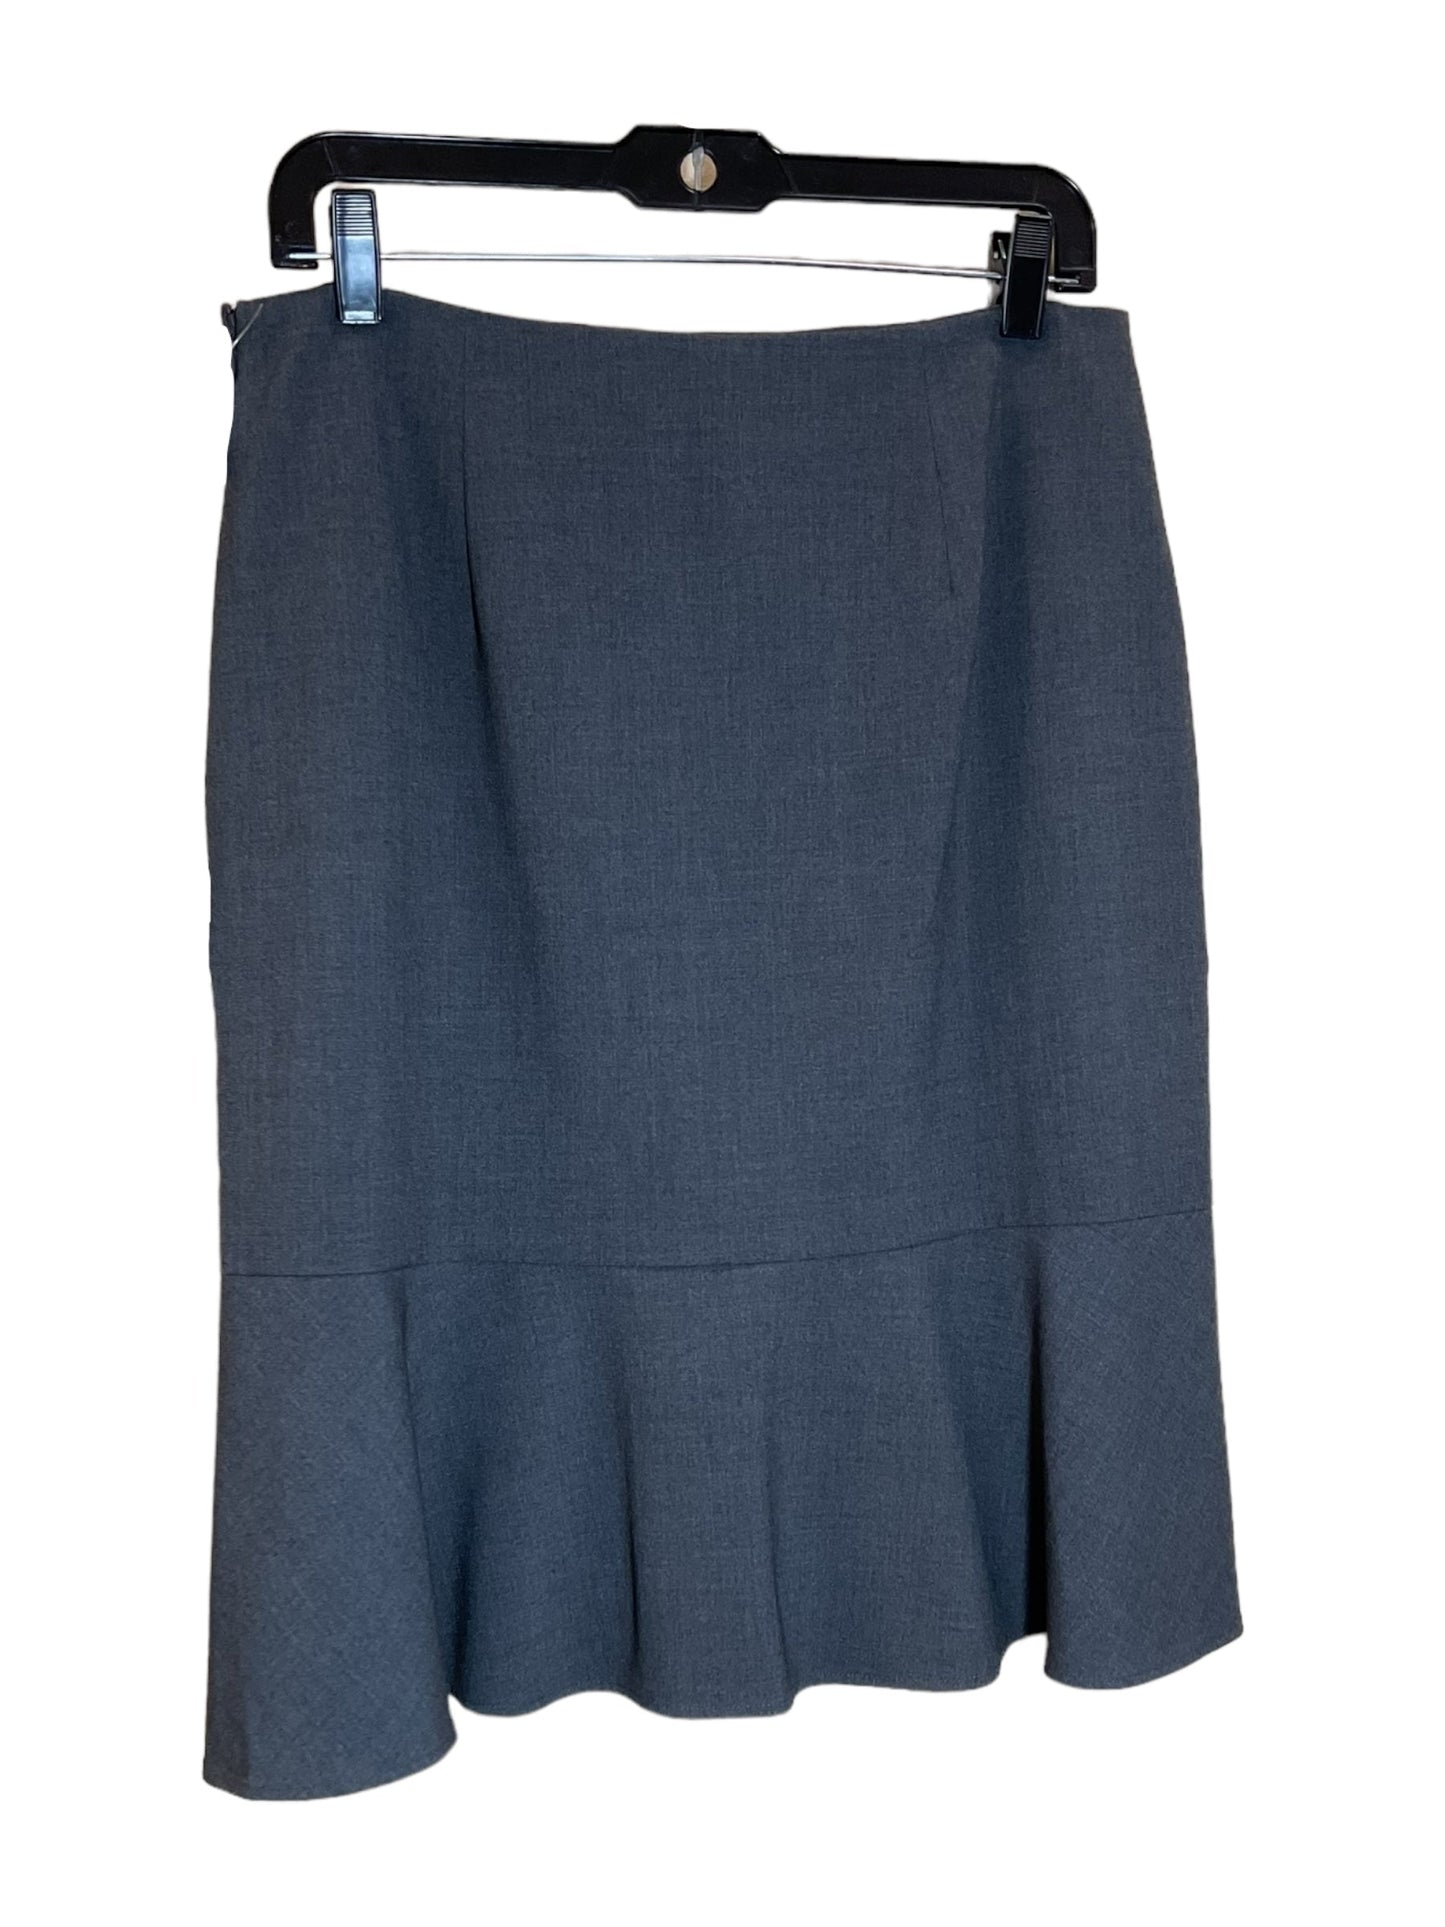 Skirt Midi By Worthington  Size: 8